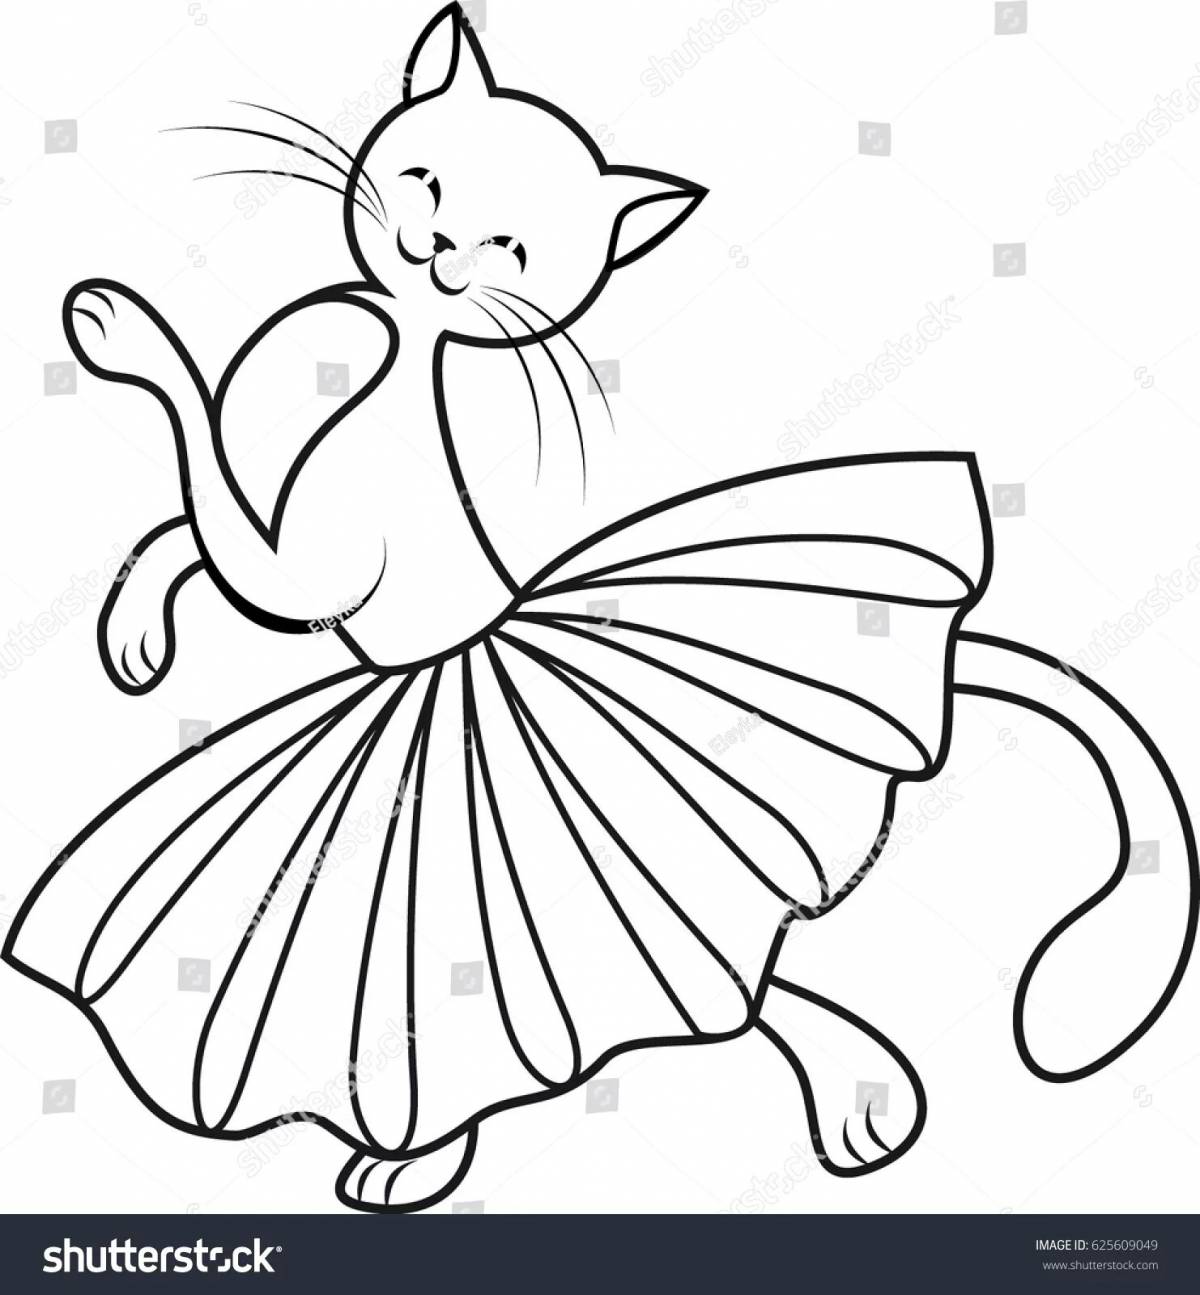 Coloring artistic cat ballerina